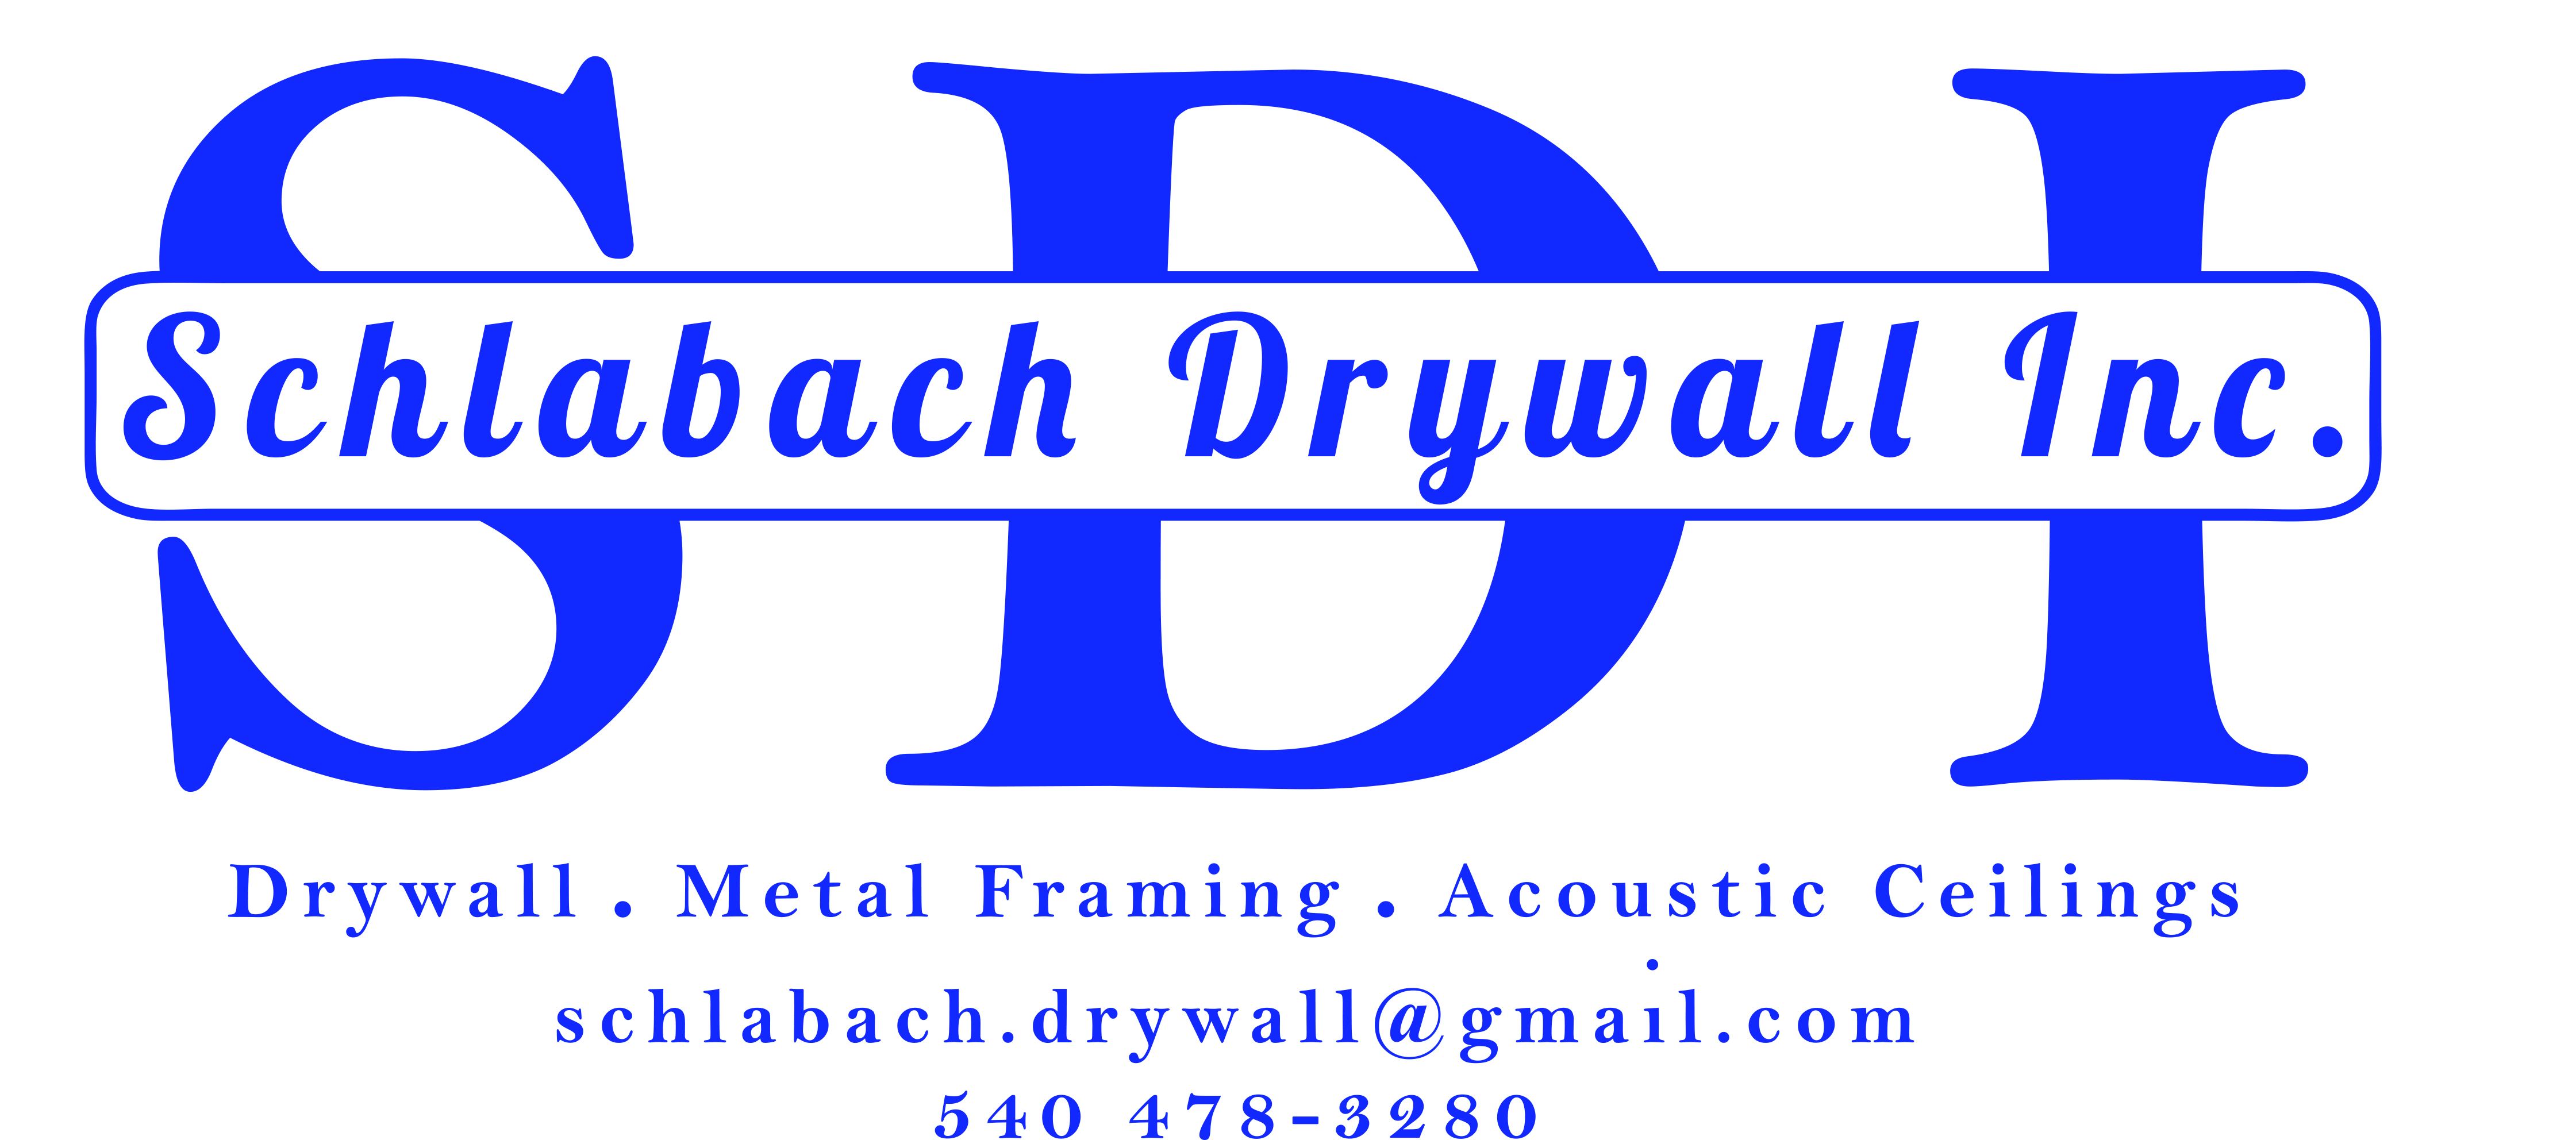 SDI Schlabach Drywall Inc. Drywall Metal Framing Acoustic Ceilings